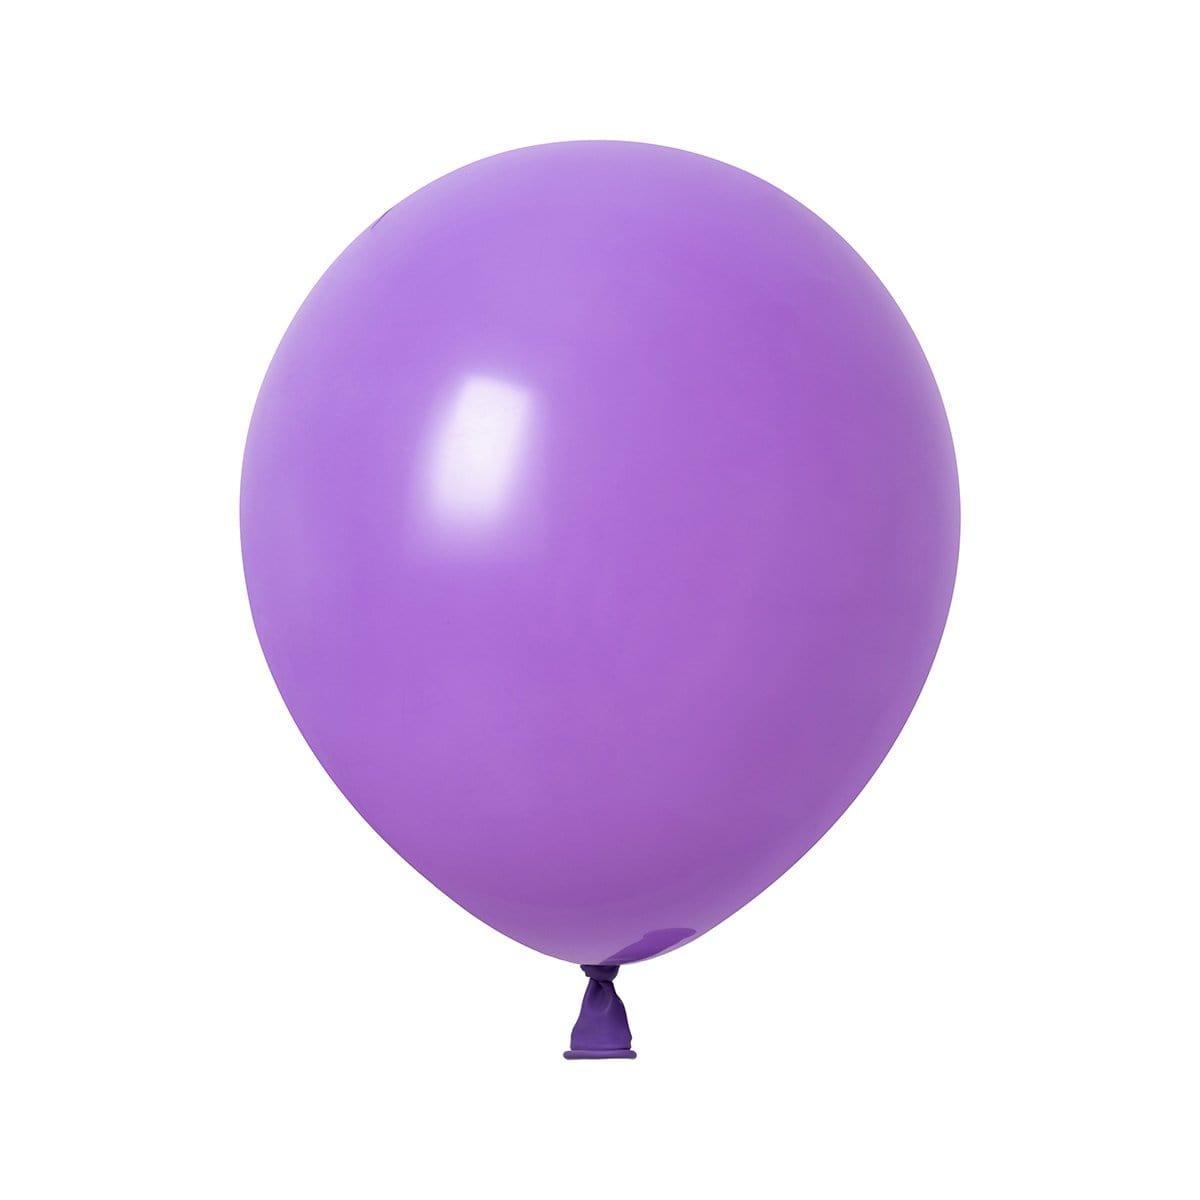 WIDE OCEAN INTERNATIONAL TRADE BEIJING CO., LTD Balloons Purple Latex Balloon 12 Inches, 72 Count 810064197802